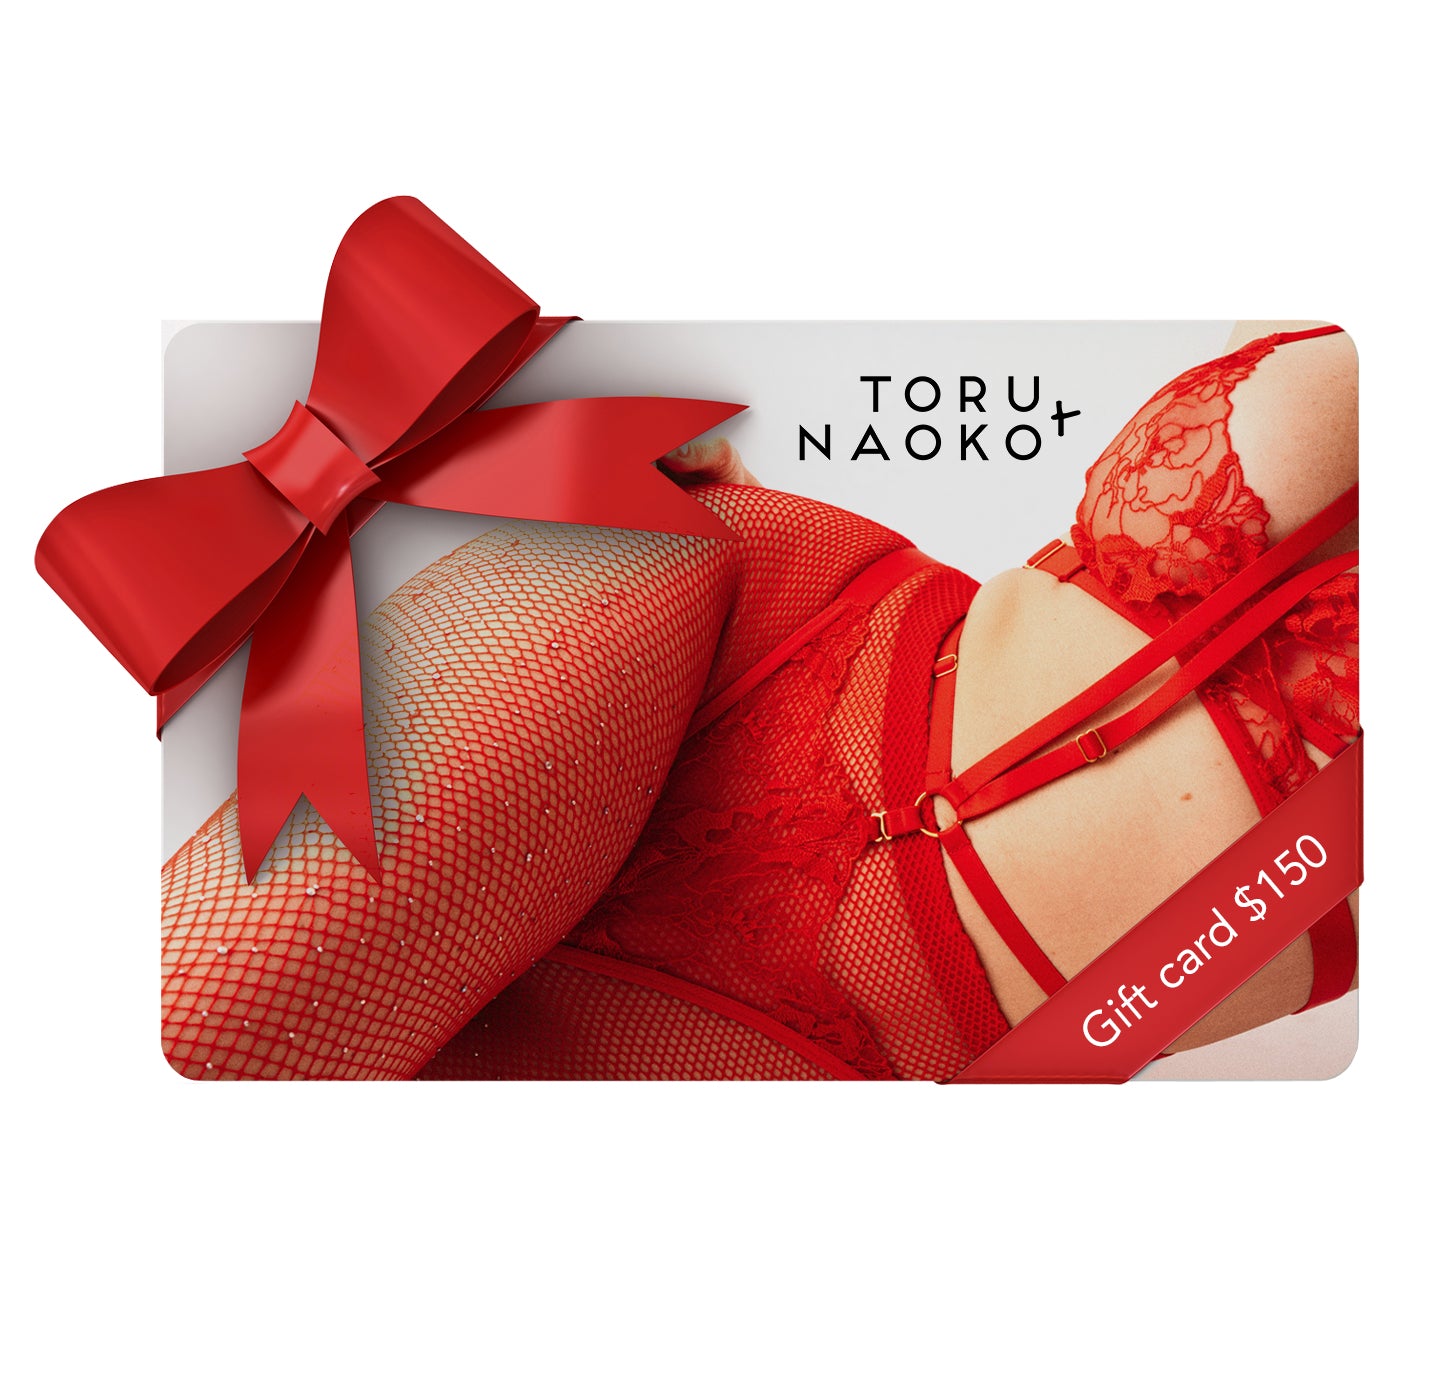 Toru & Naoko lingerie - Gift card